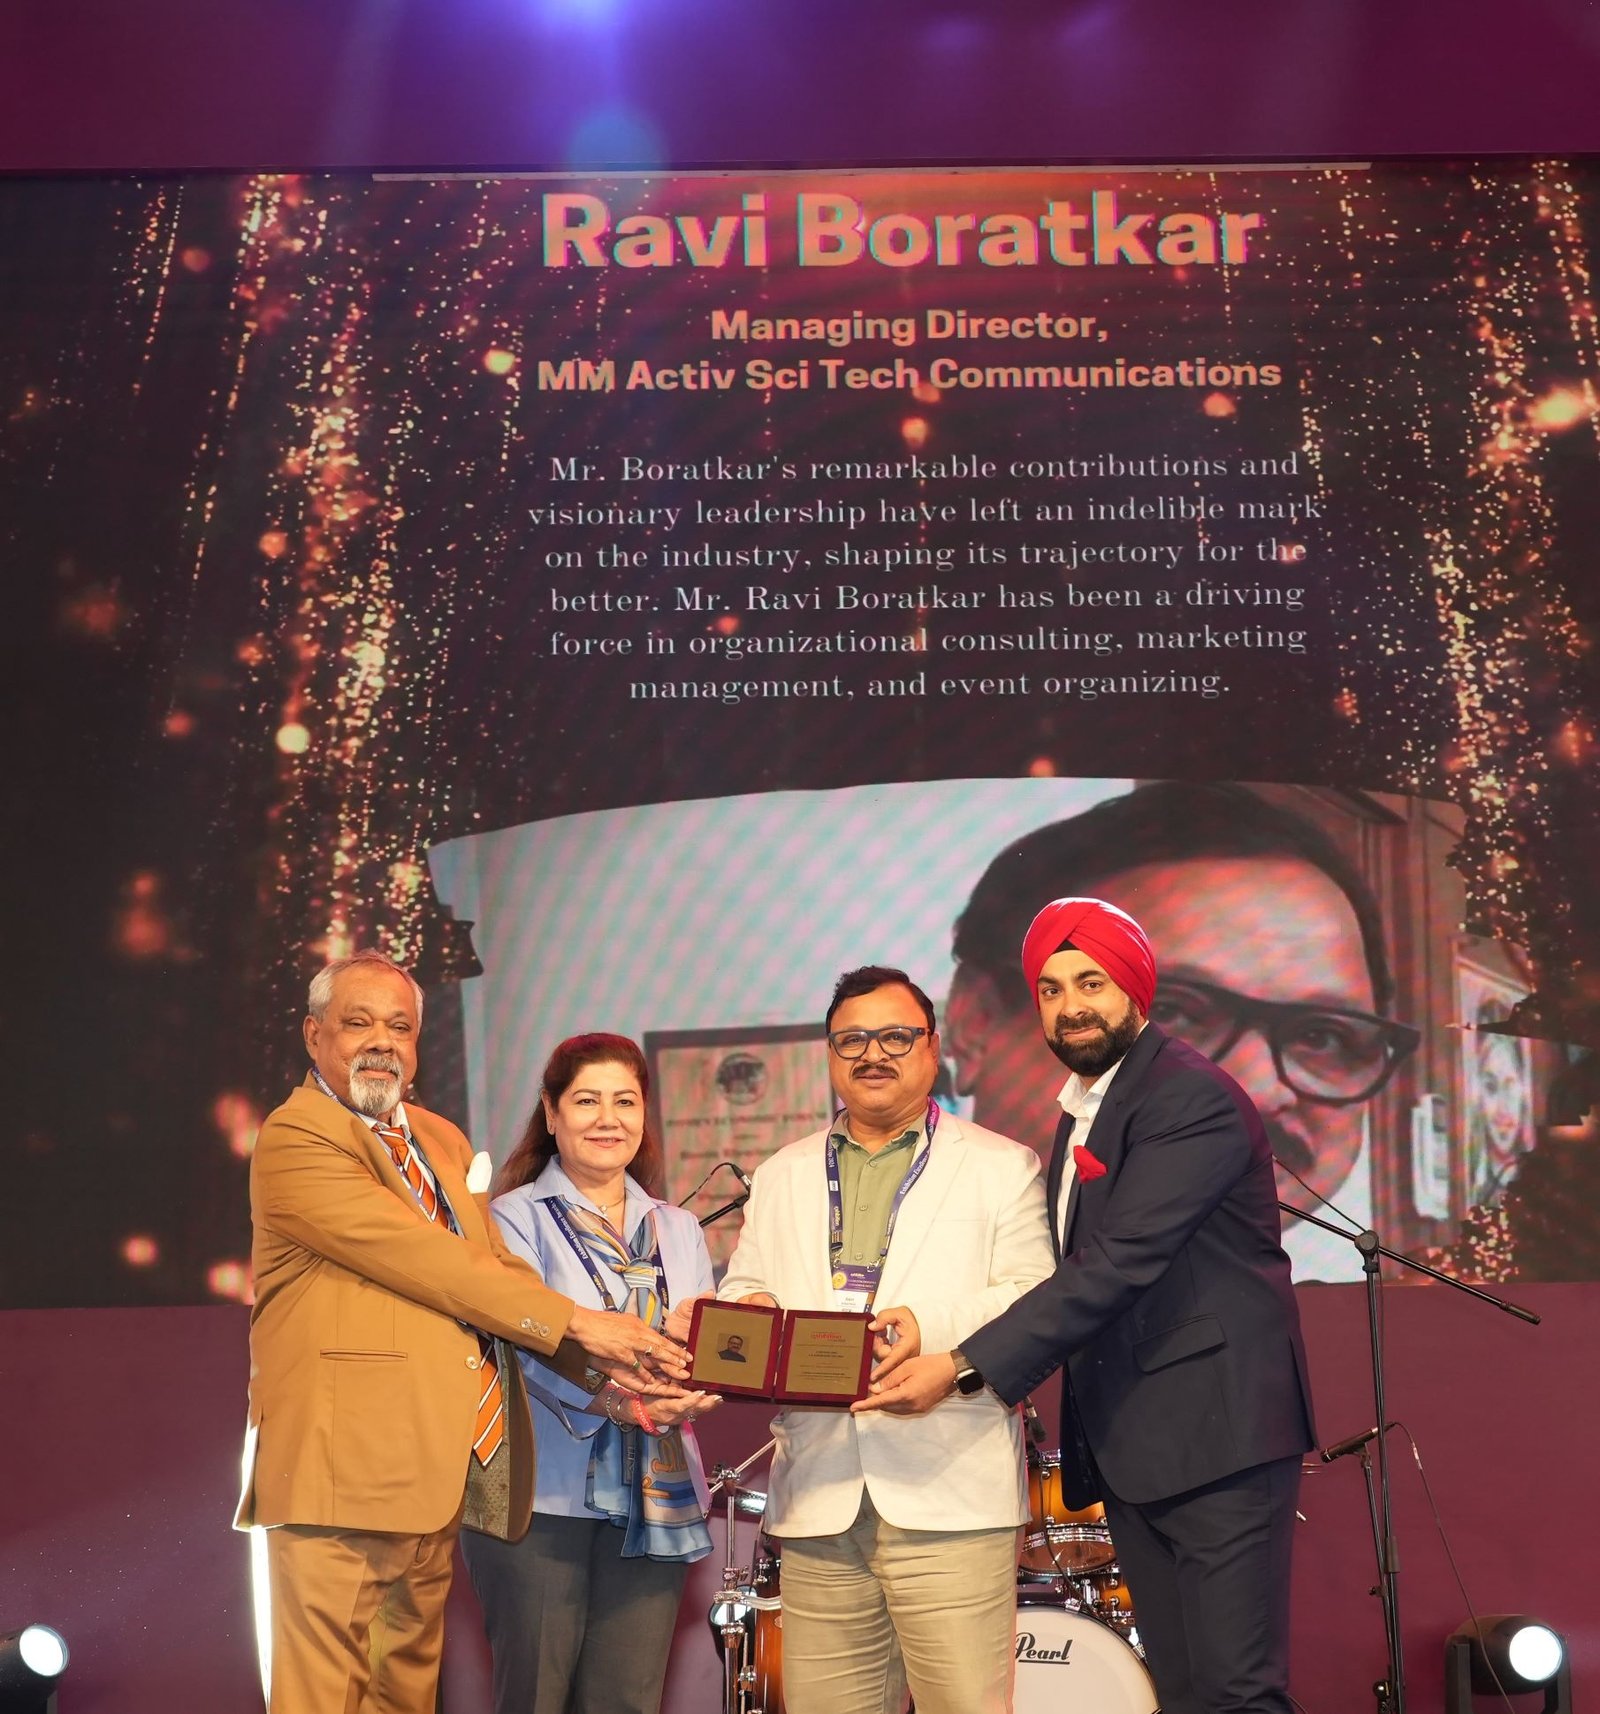 Image caption: Ravindra Boratkar receiving Exemplary Leadership Award from dignitaries at the Exhibition Excellence Award ceremony